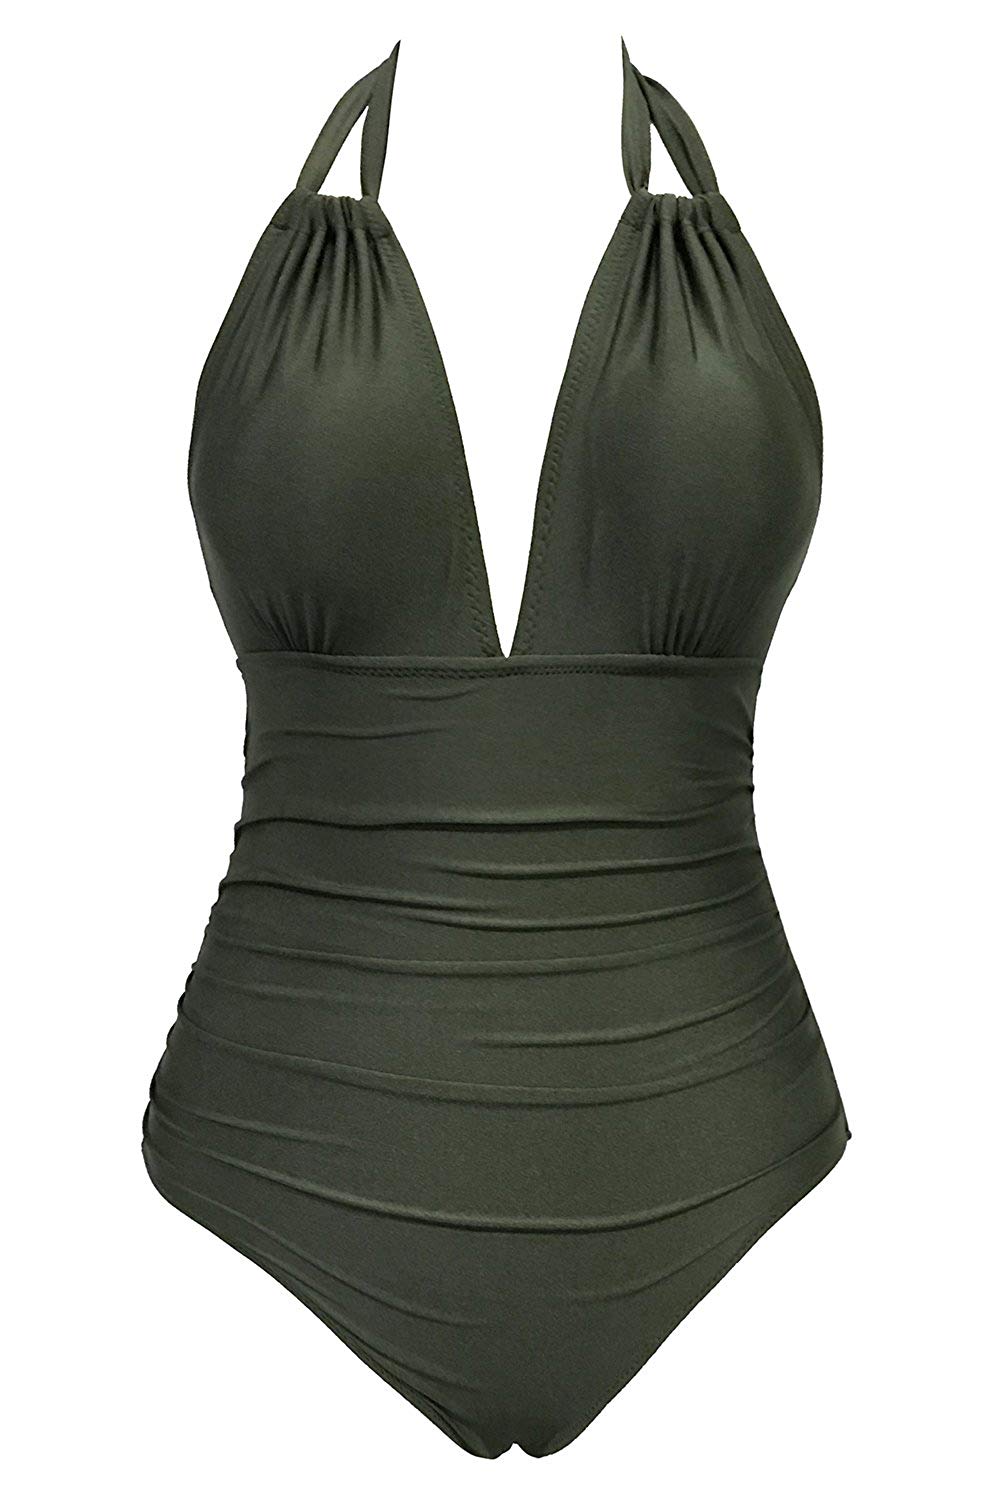 Cupshe Women S Keep Secrets Halter One Piece Swimsuit Army Green Size 8 0 Fggm Ebay